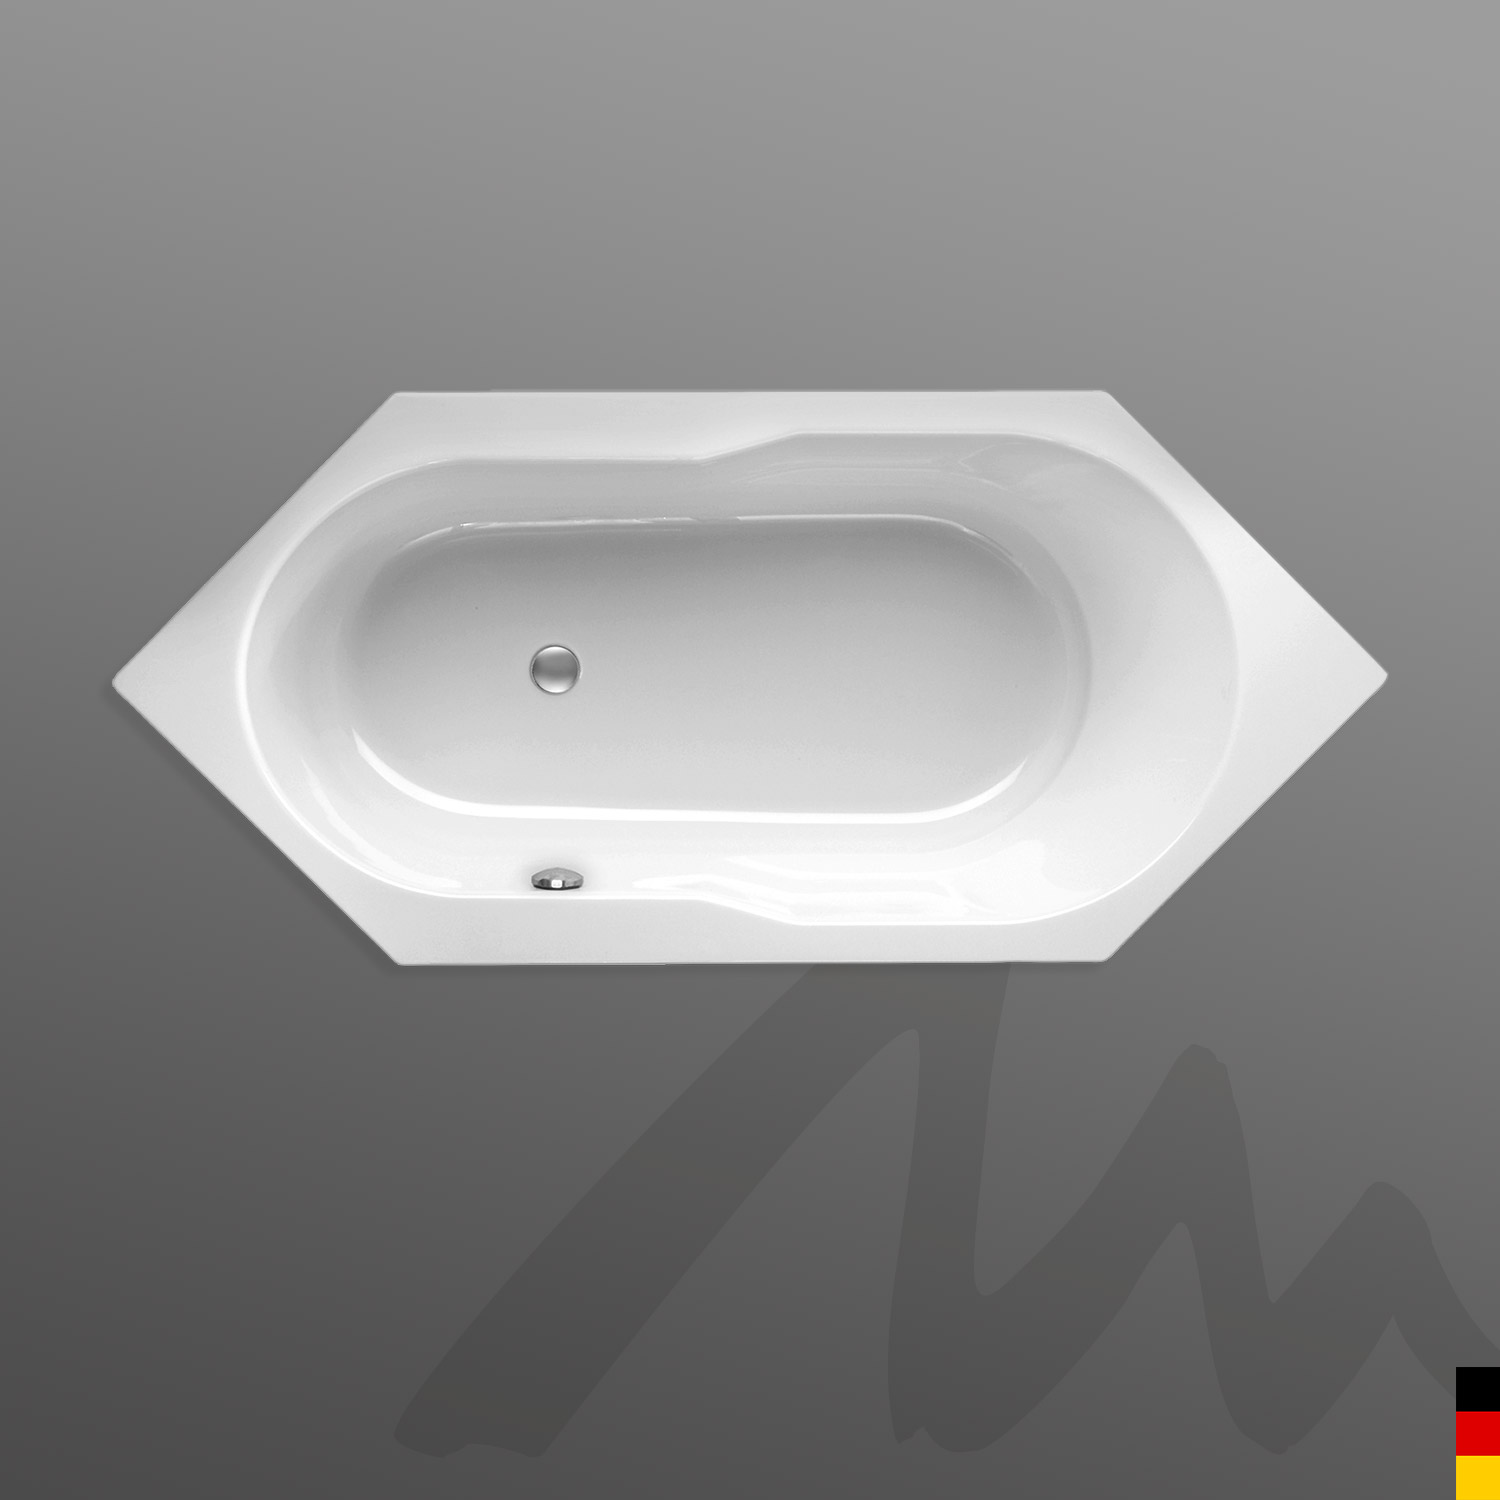 Mauersberger Badewanne 6-Eck Oleca 190/85  190x85x43  Farbe:weiß